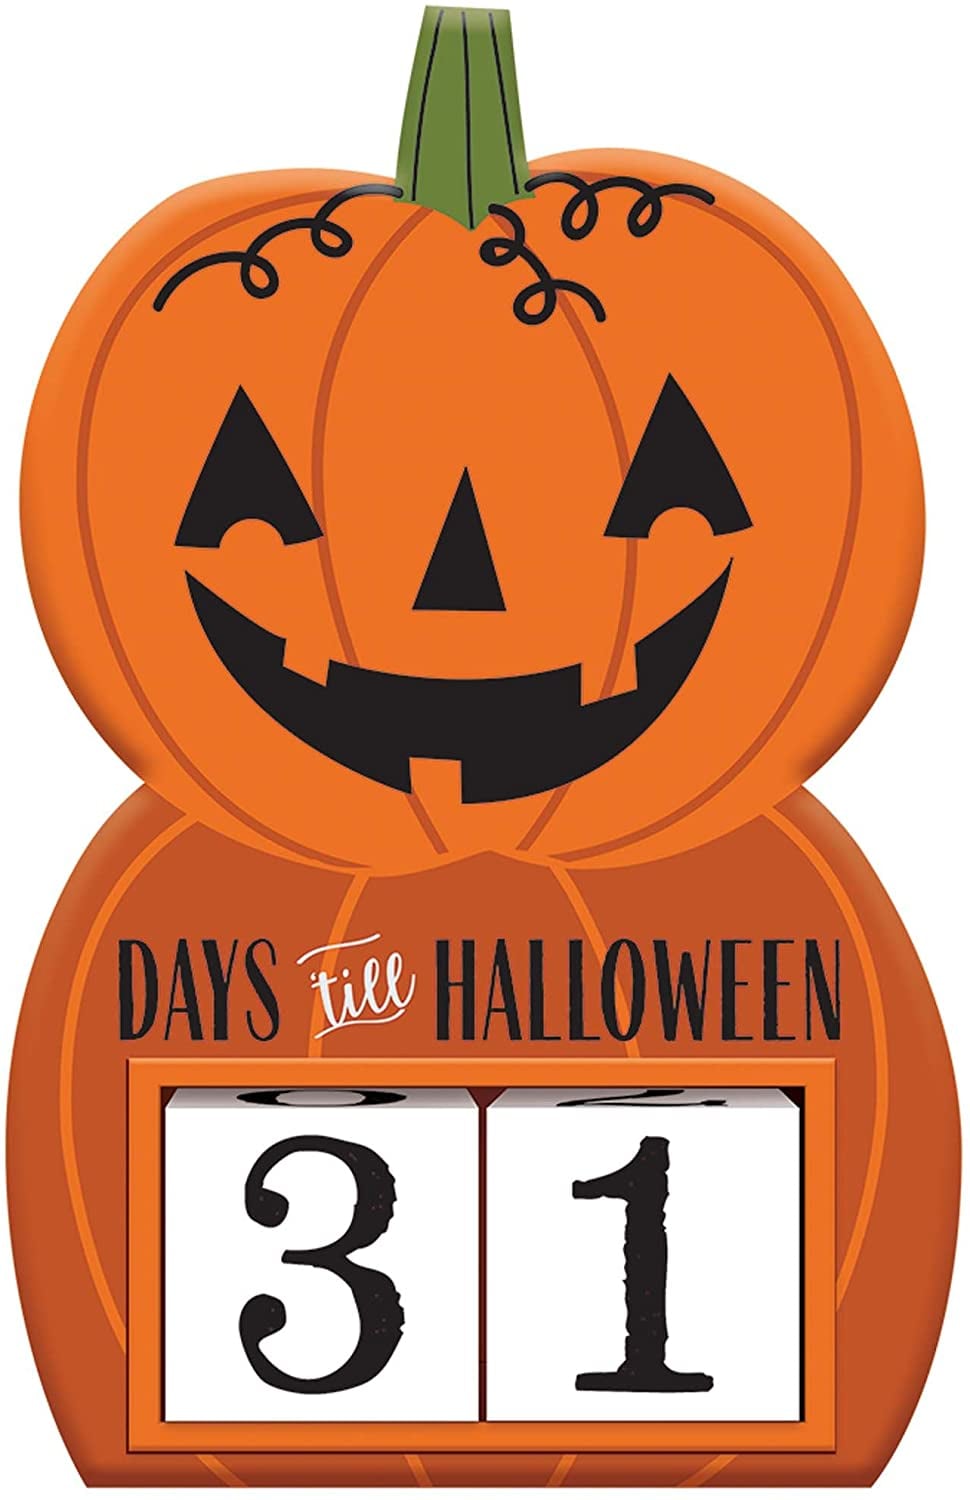 How many weeks days till halloween gail's blog